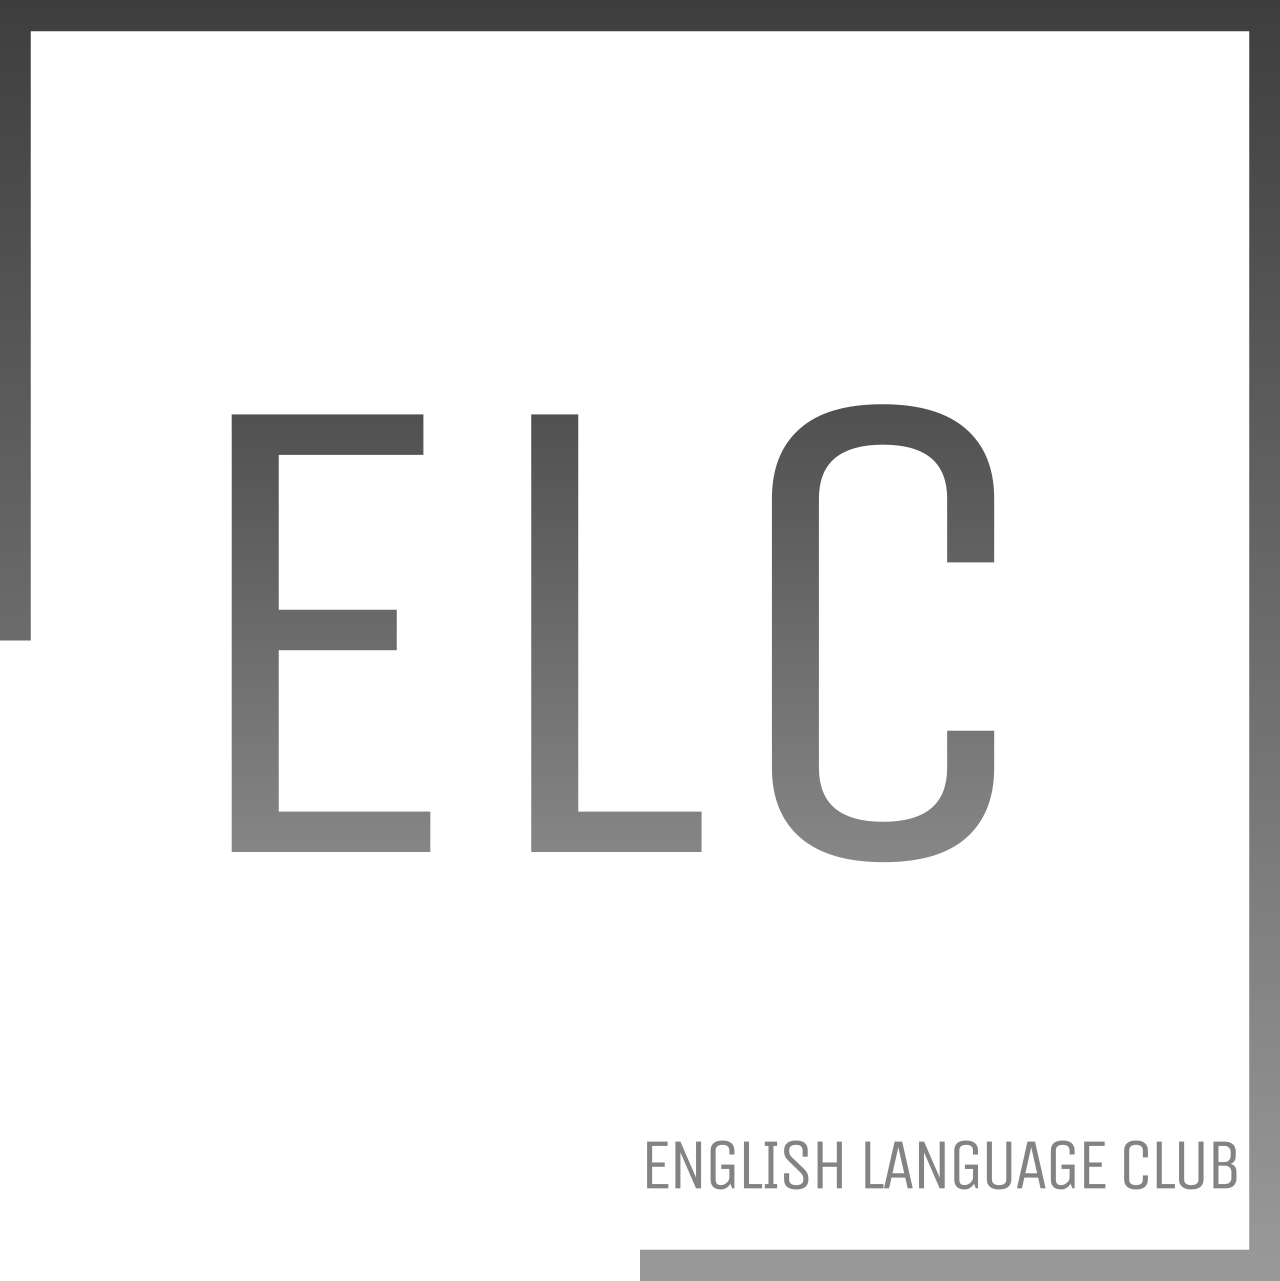 English language club's logo